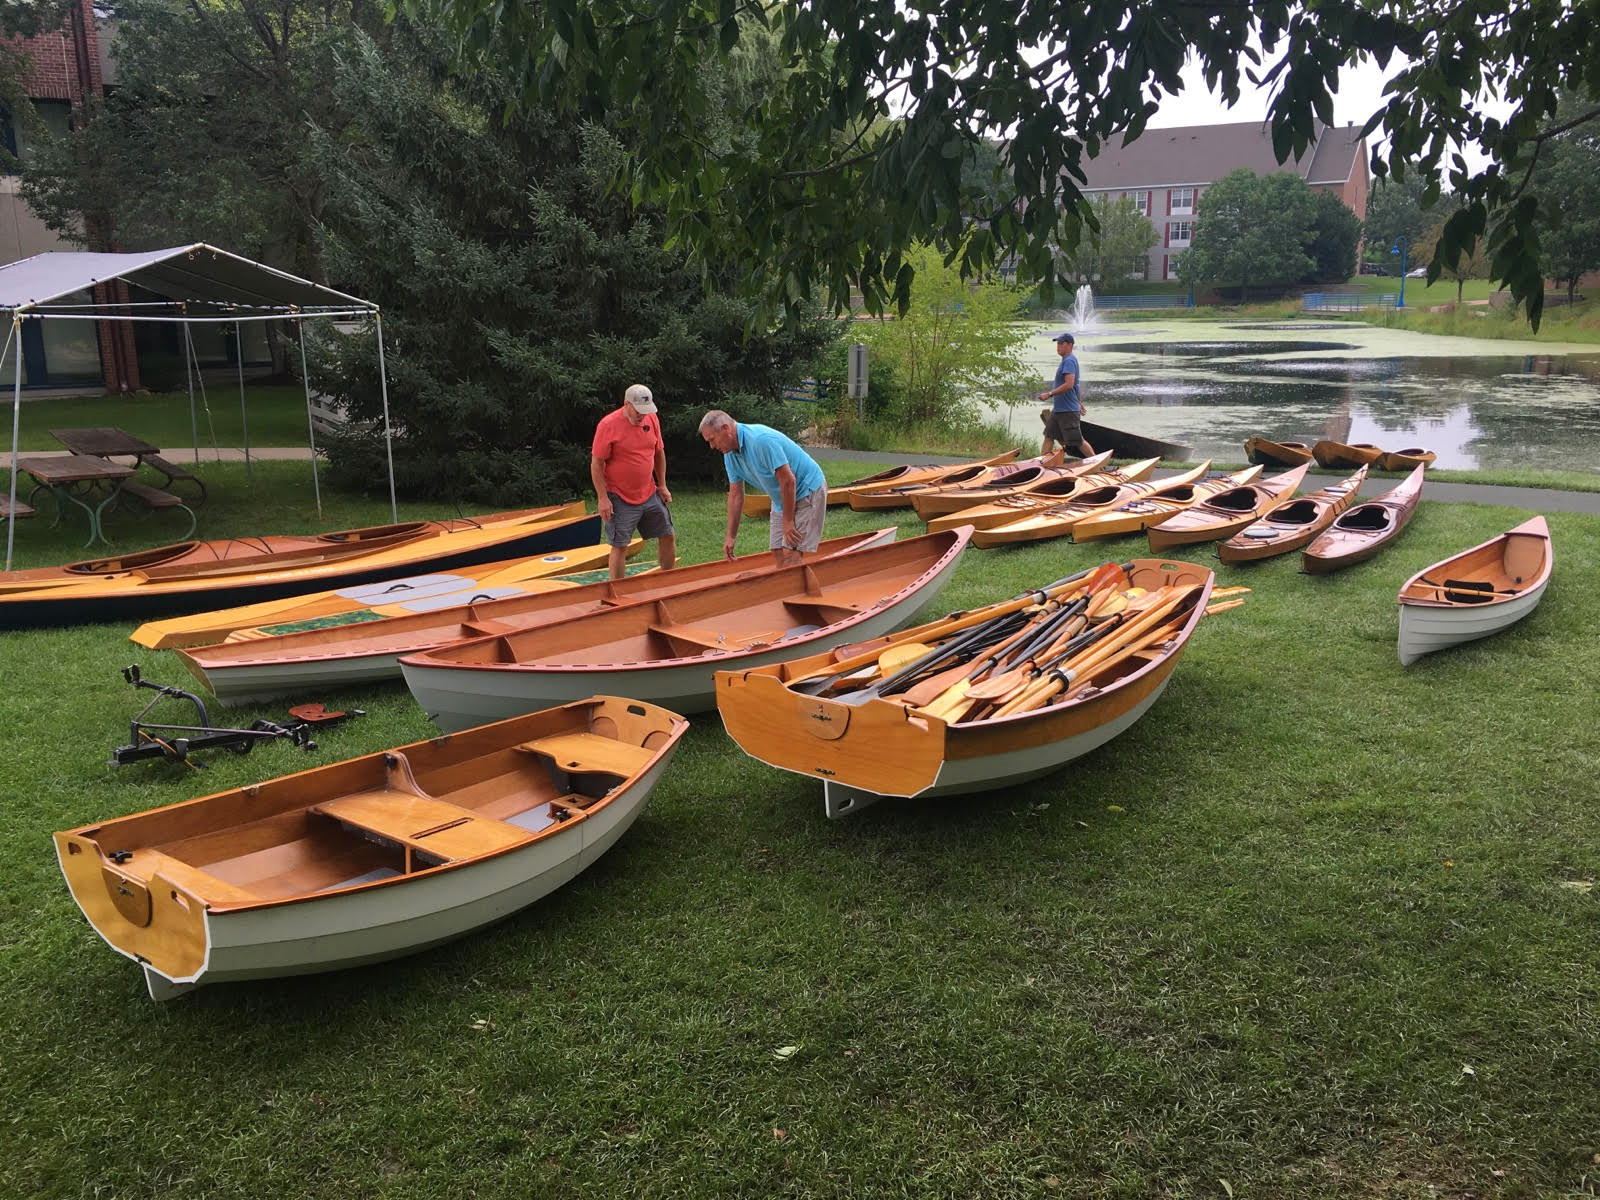 Chesapeake Light Craft Kayak Kits